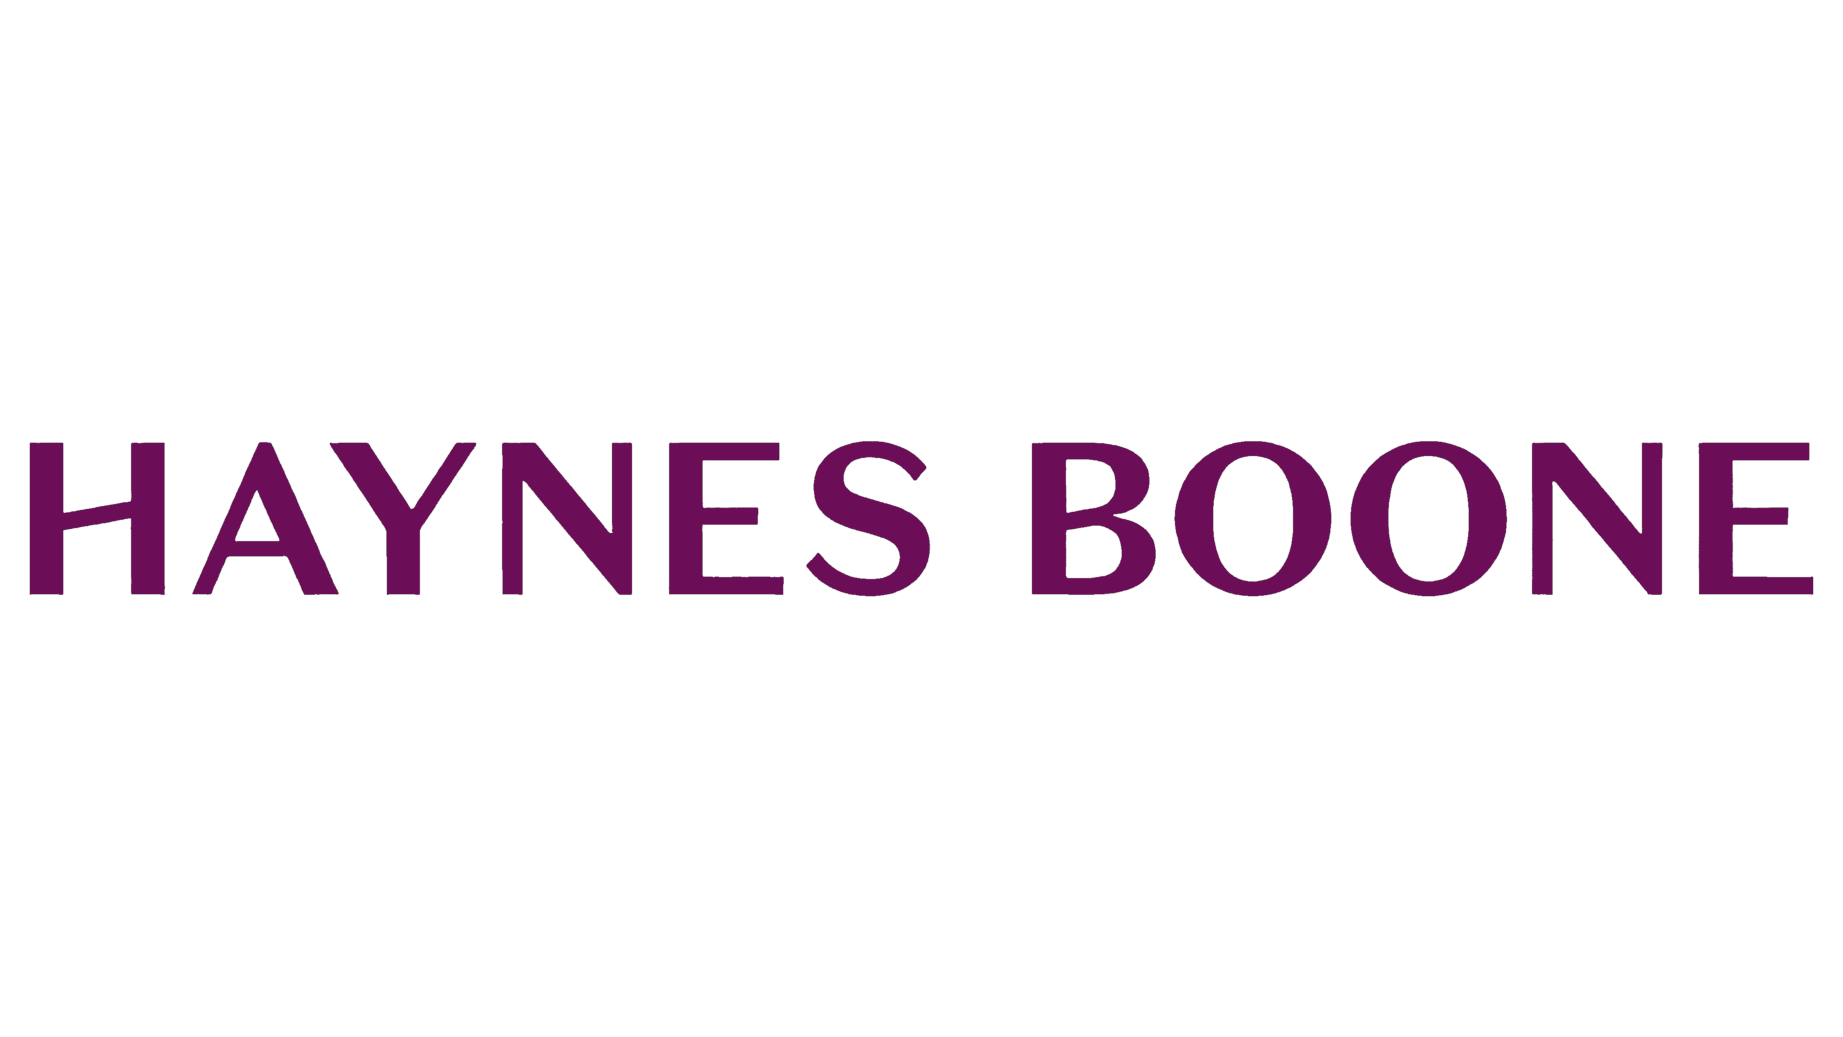 Haynes boone sign